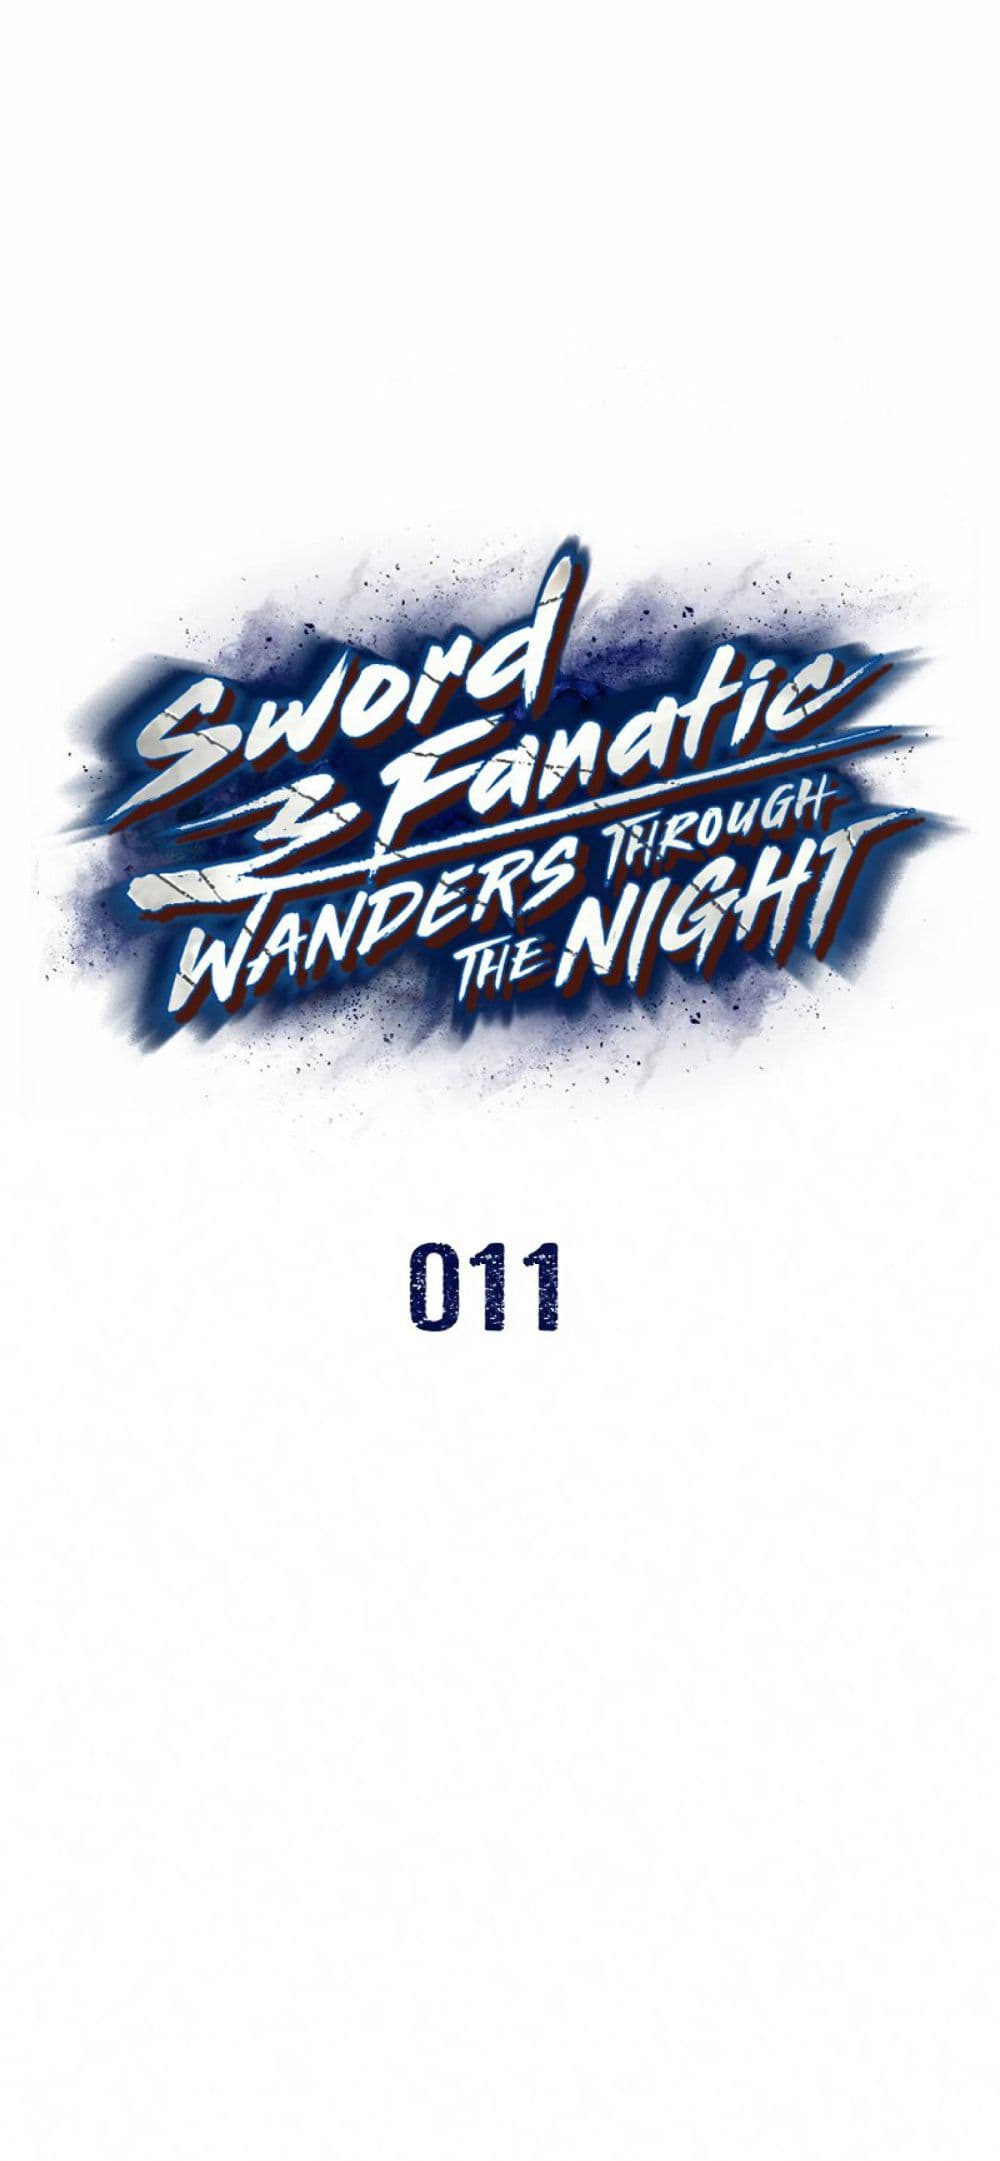 Sword Fanatic Wanders Through The Night 11-11